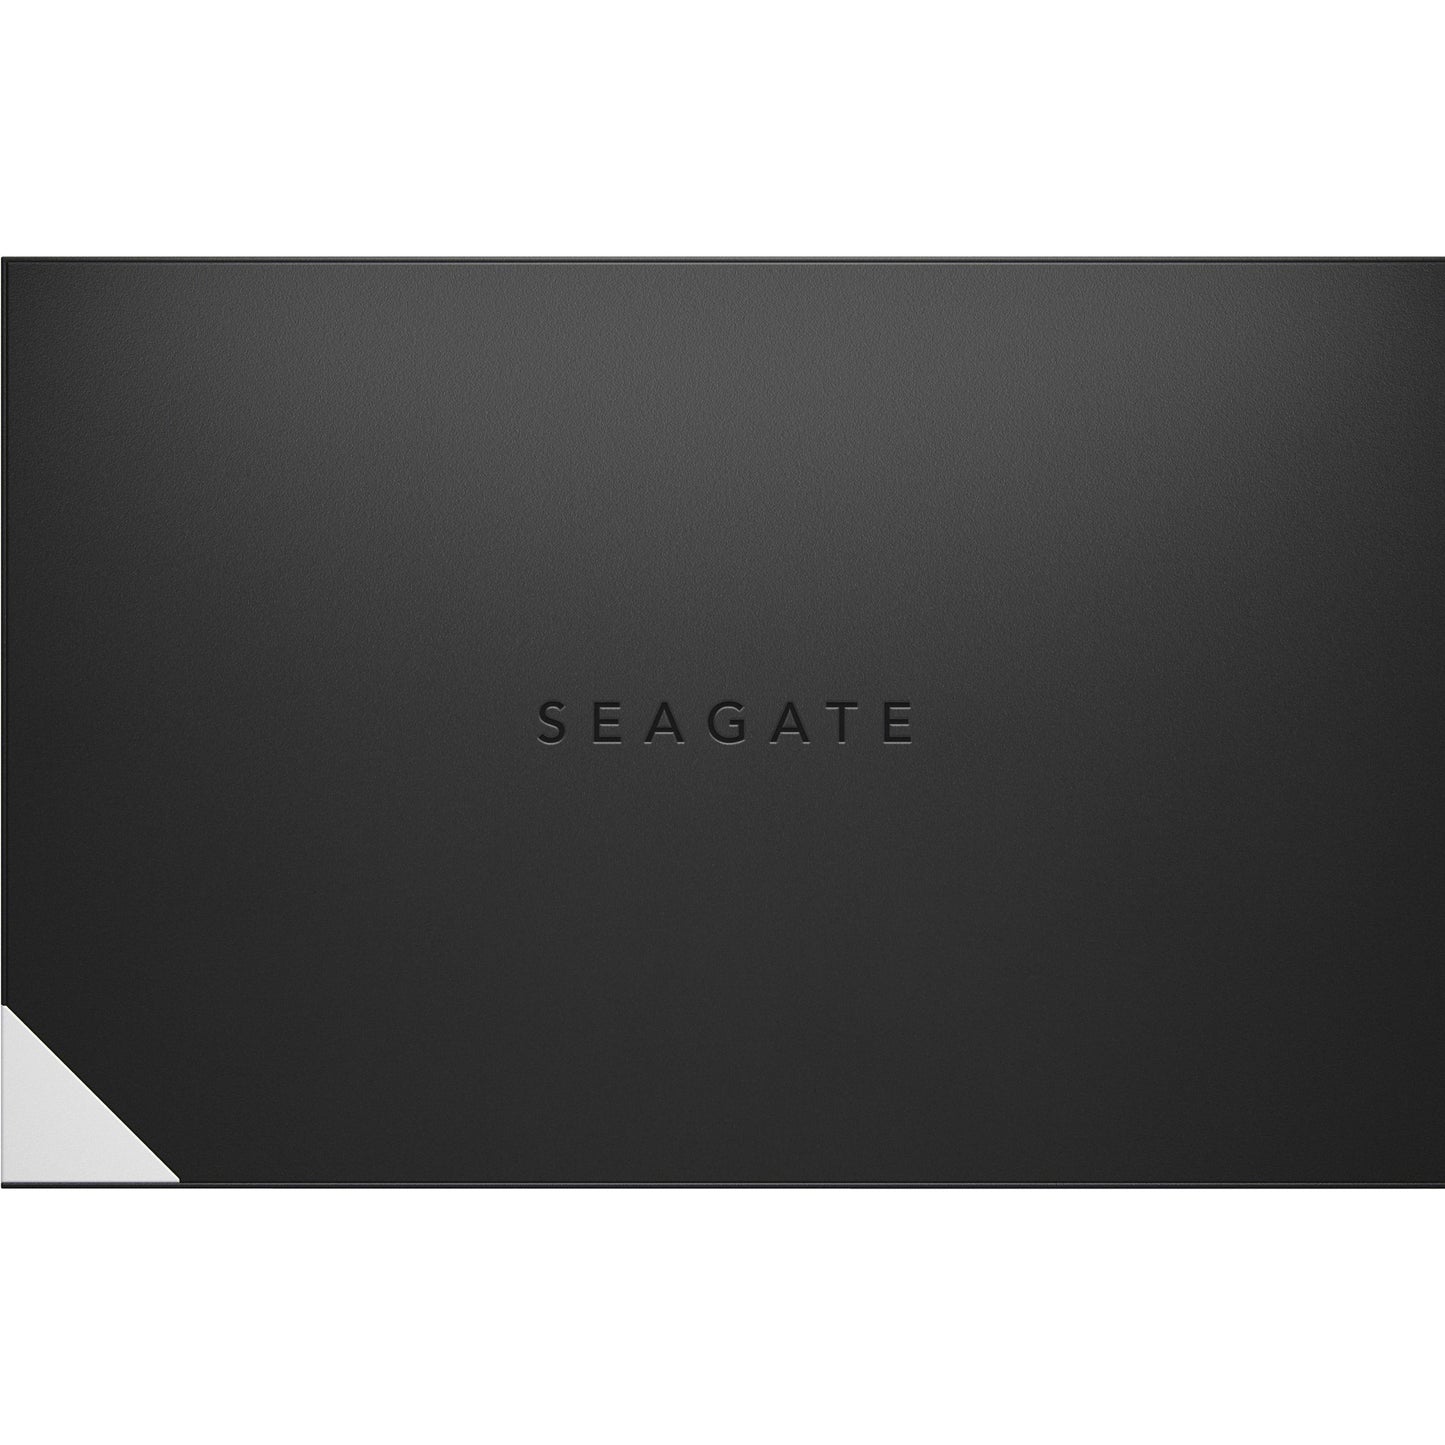 Seagate One Touch STLC6000400 6 TB Hard Drive - 3.5" External - SATA (SATA/600) - Shingled Magnetic Recording (SMR) Method - Black